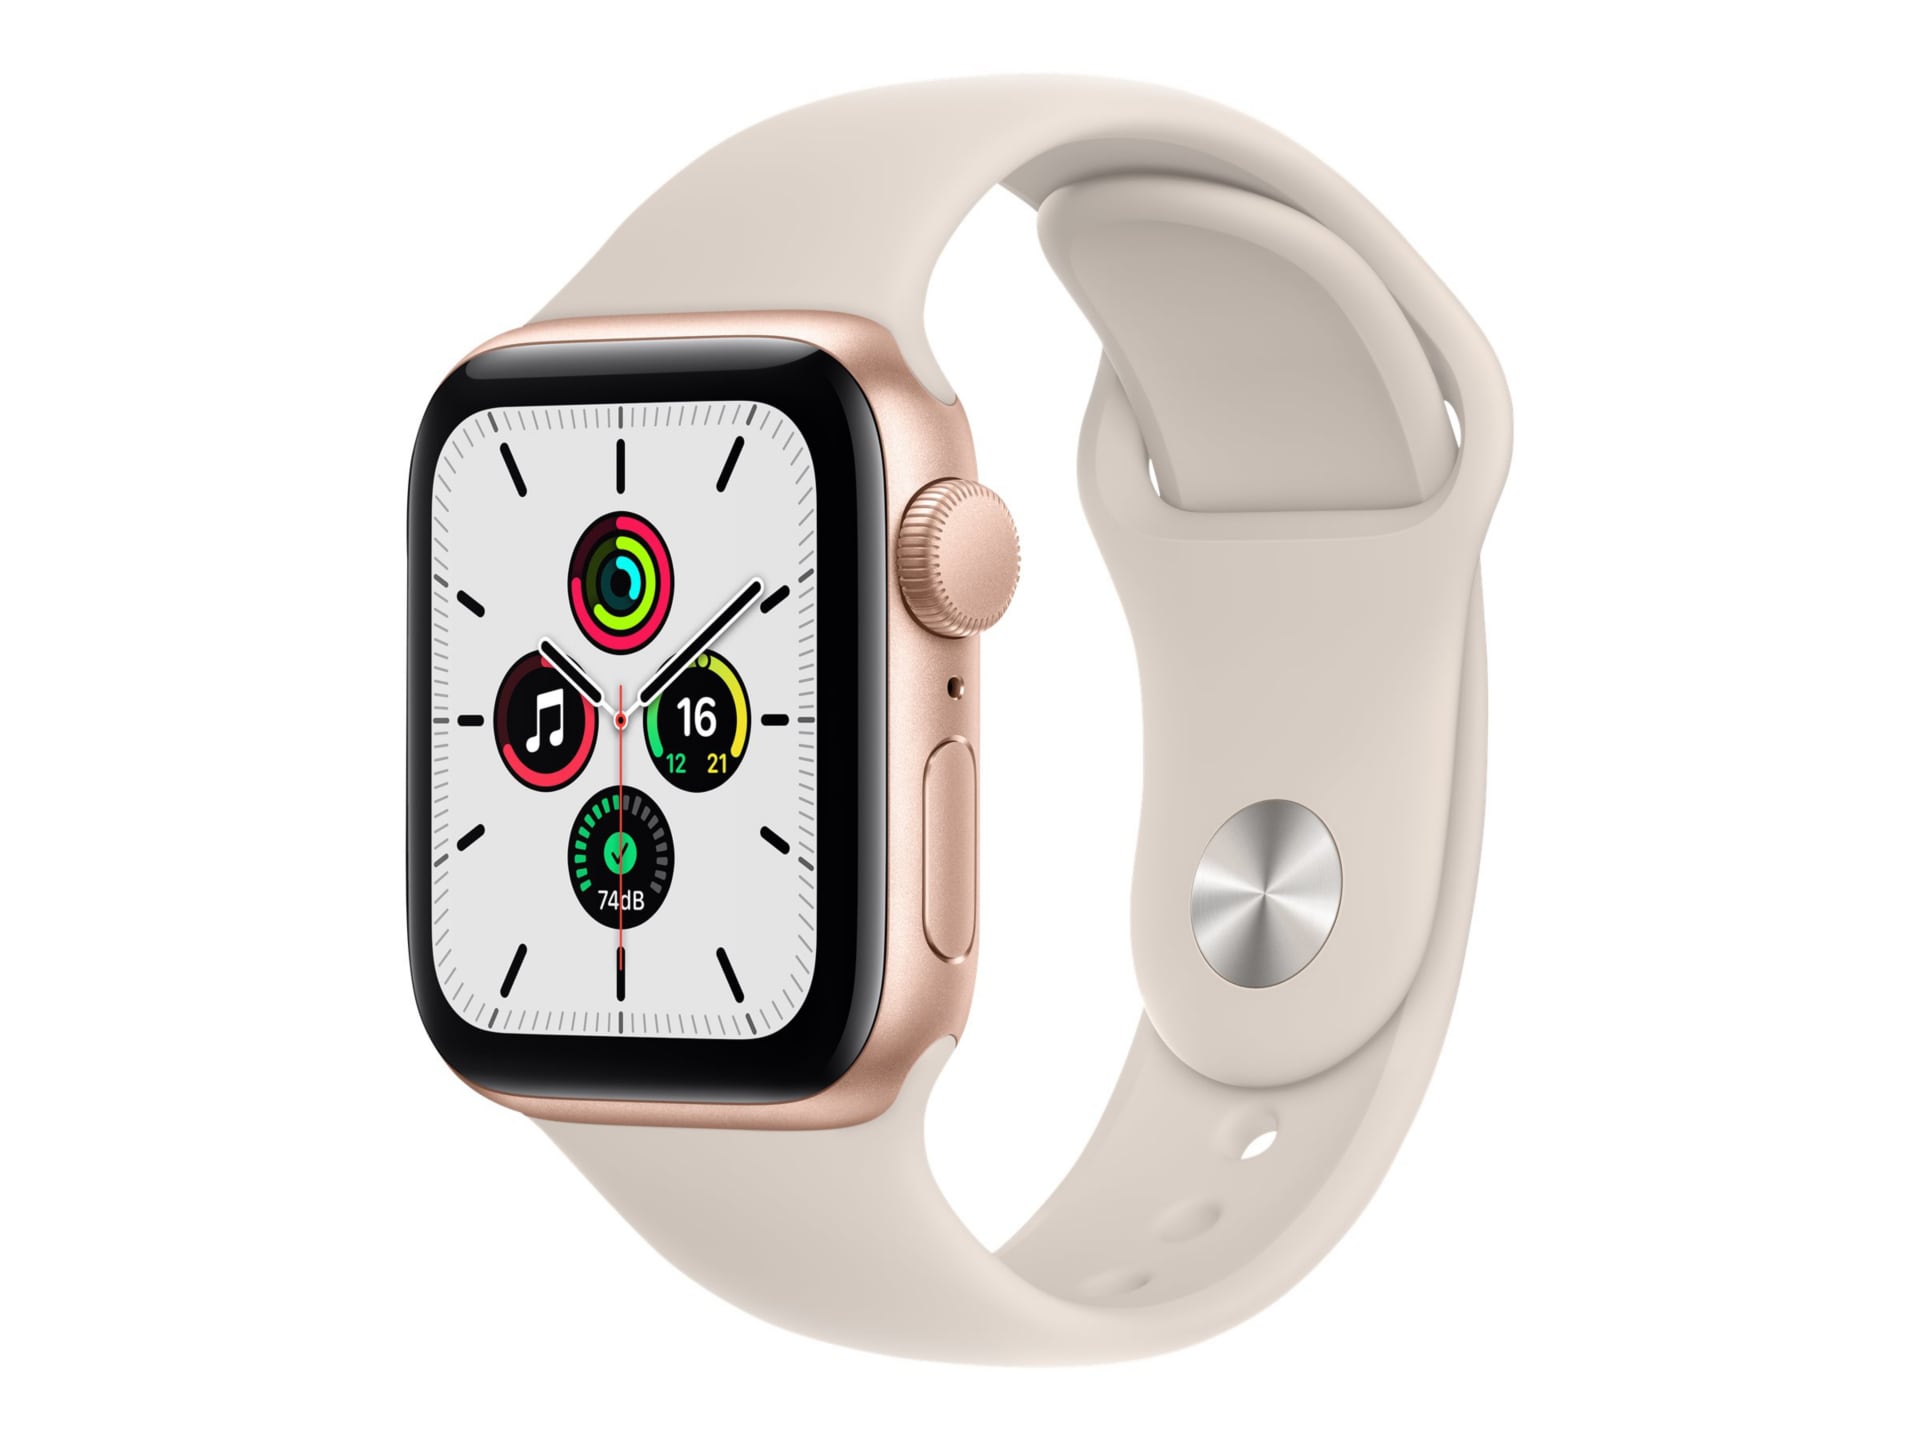 Apple Watch SE (GPS) - gold aluminum - smart watch with sport band - starlight - 32 GB